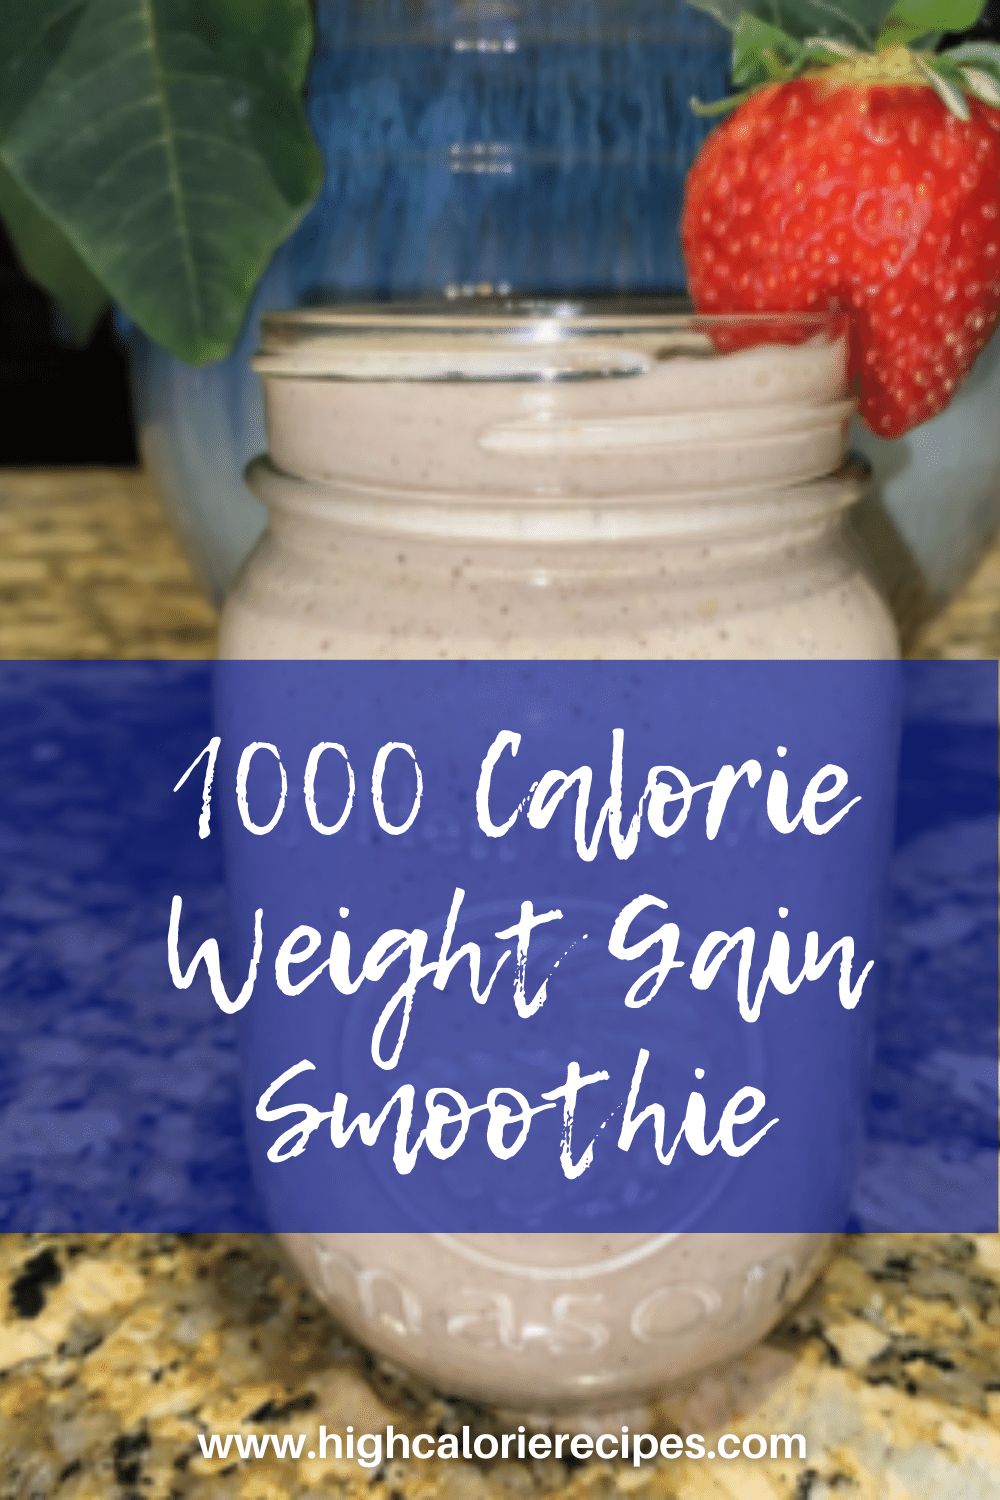 Top 82+ imagen 1000 calorie smoothie recipes